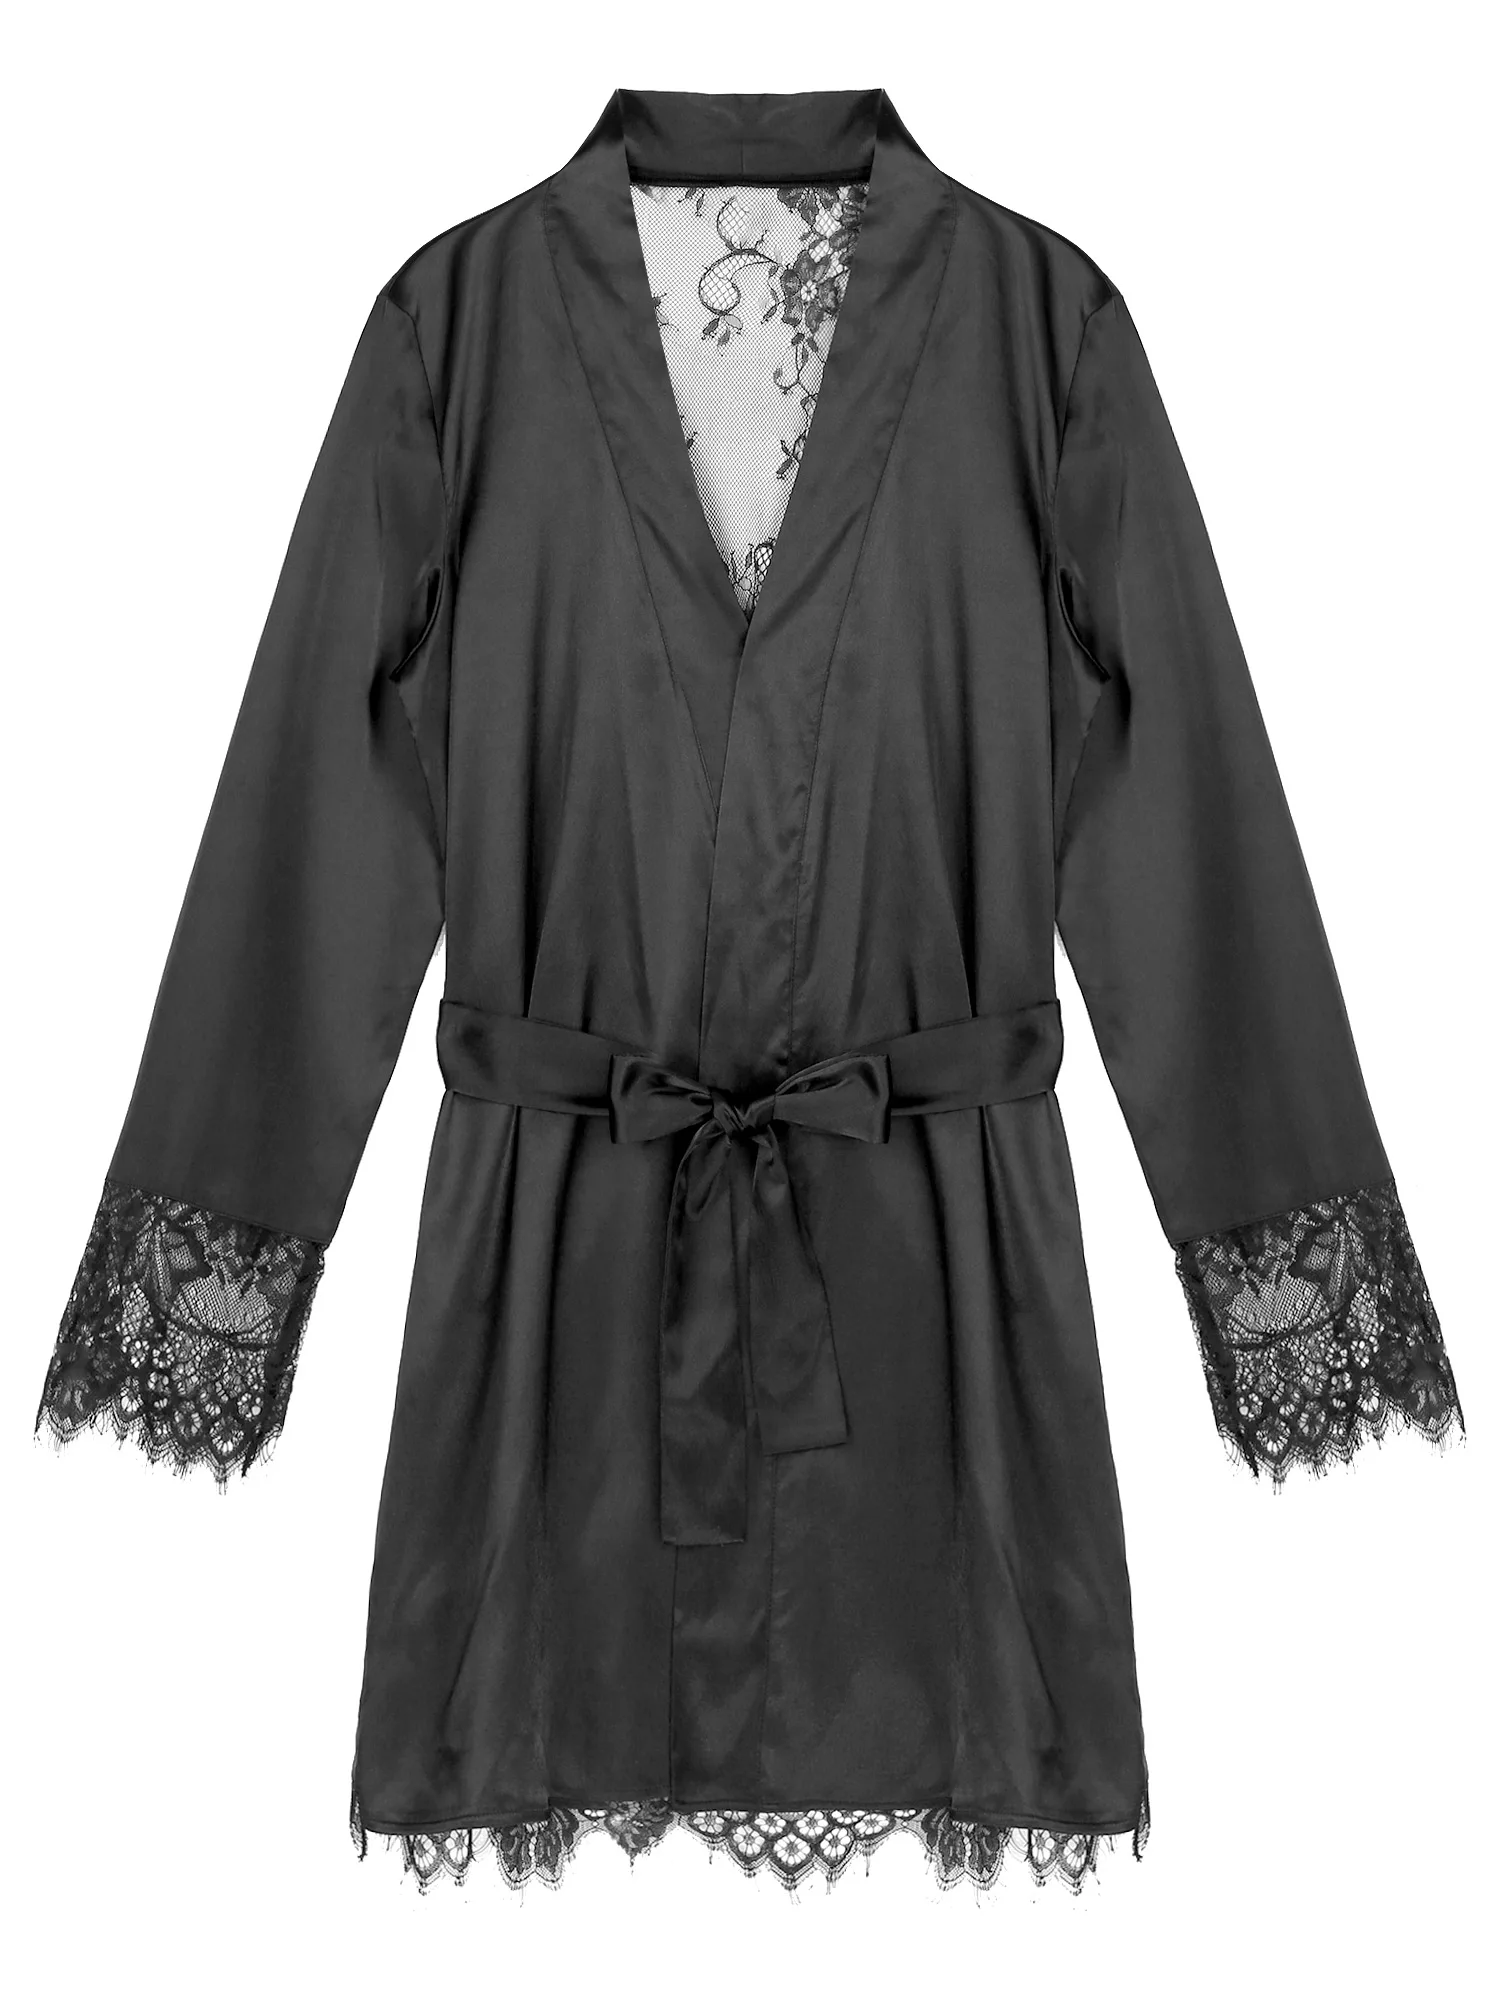 Mens Lingerie See-through Floral Lace Satin Night-robe Nightwear Patchwork Long Sleeve Robes Kimono Belted Bathrobe Sleepwear pajama pants men's